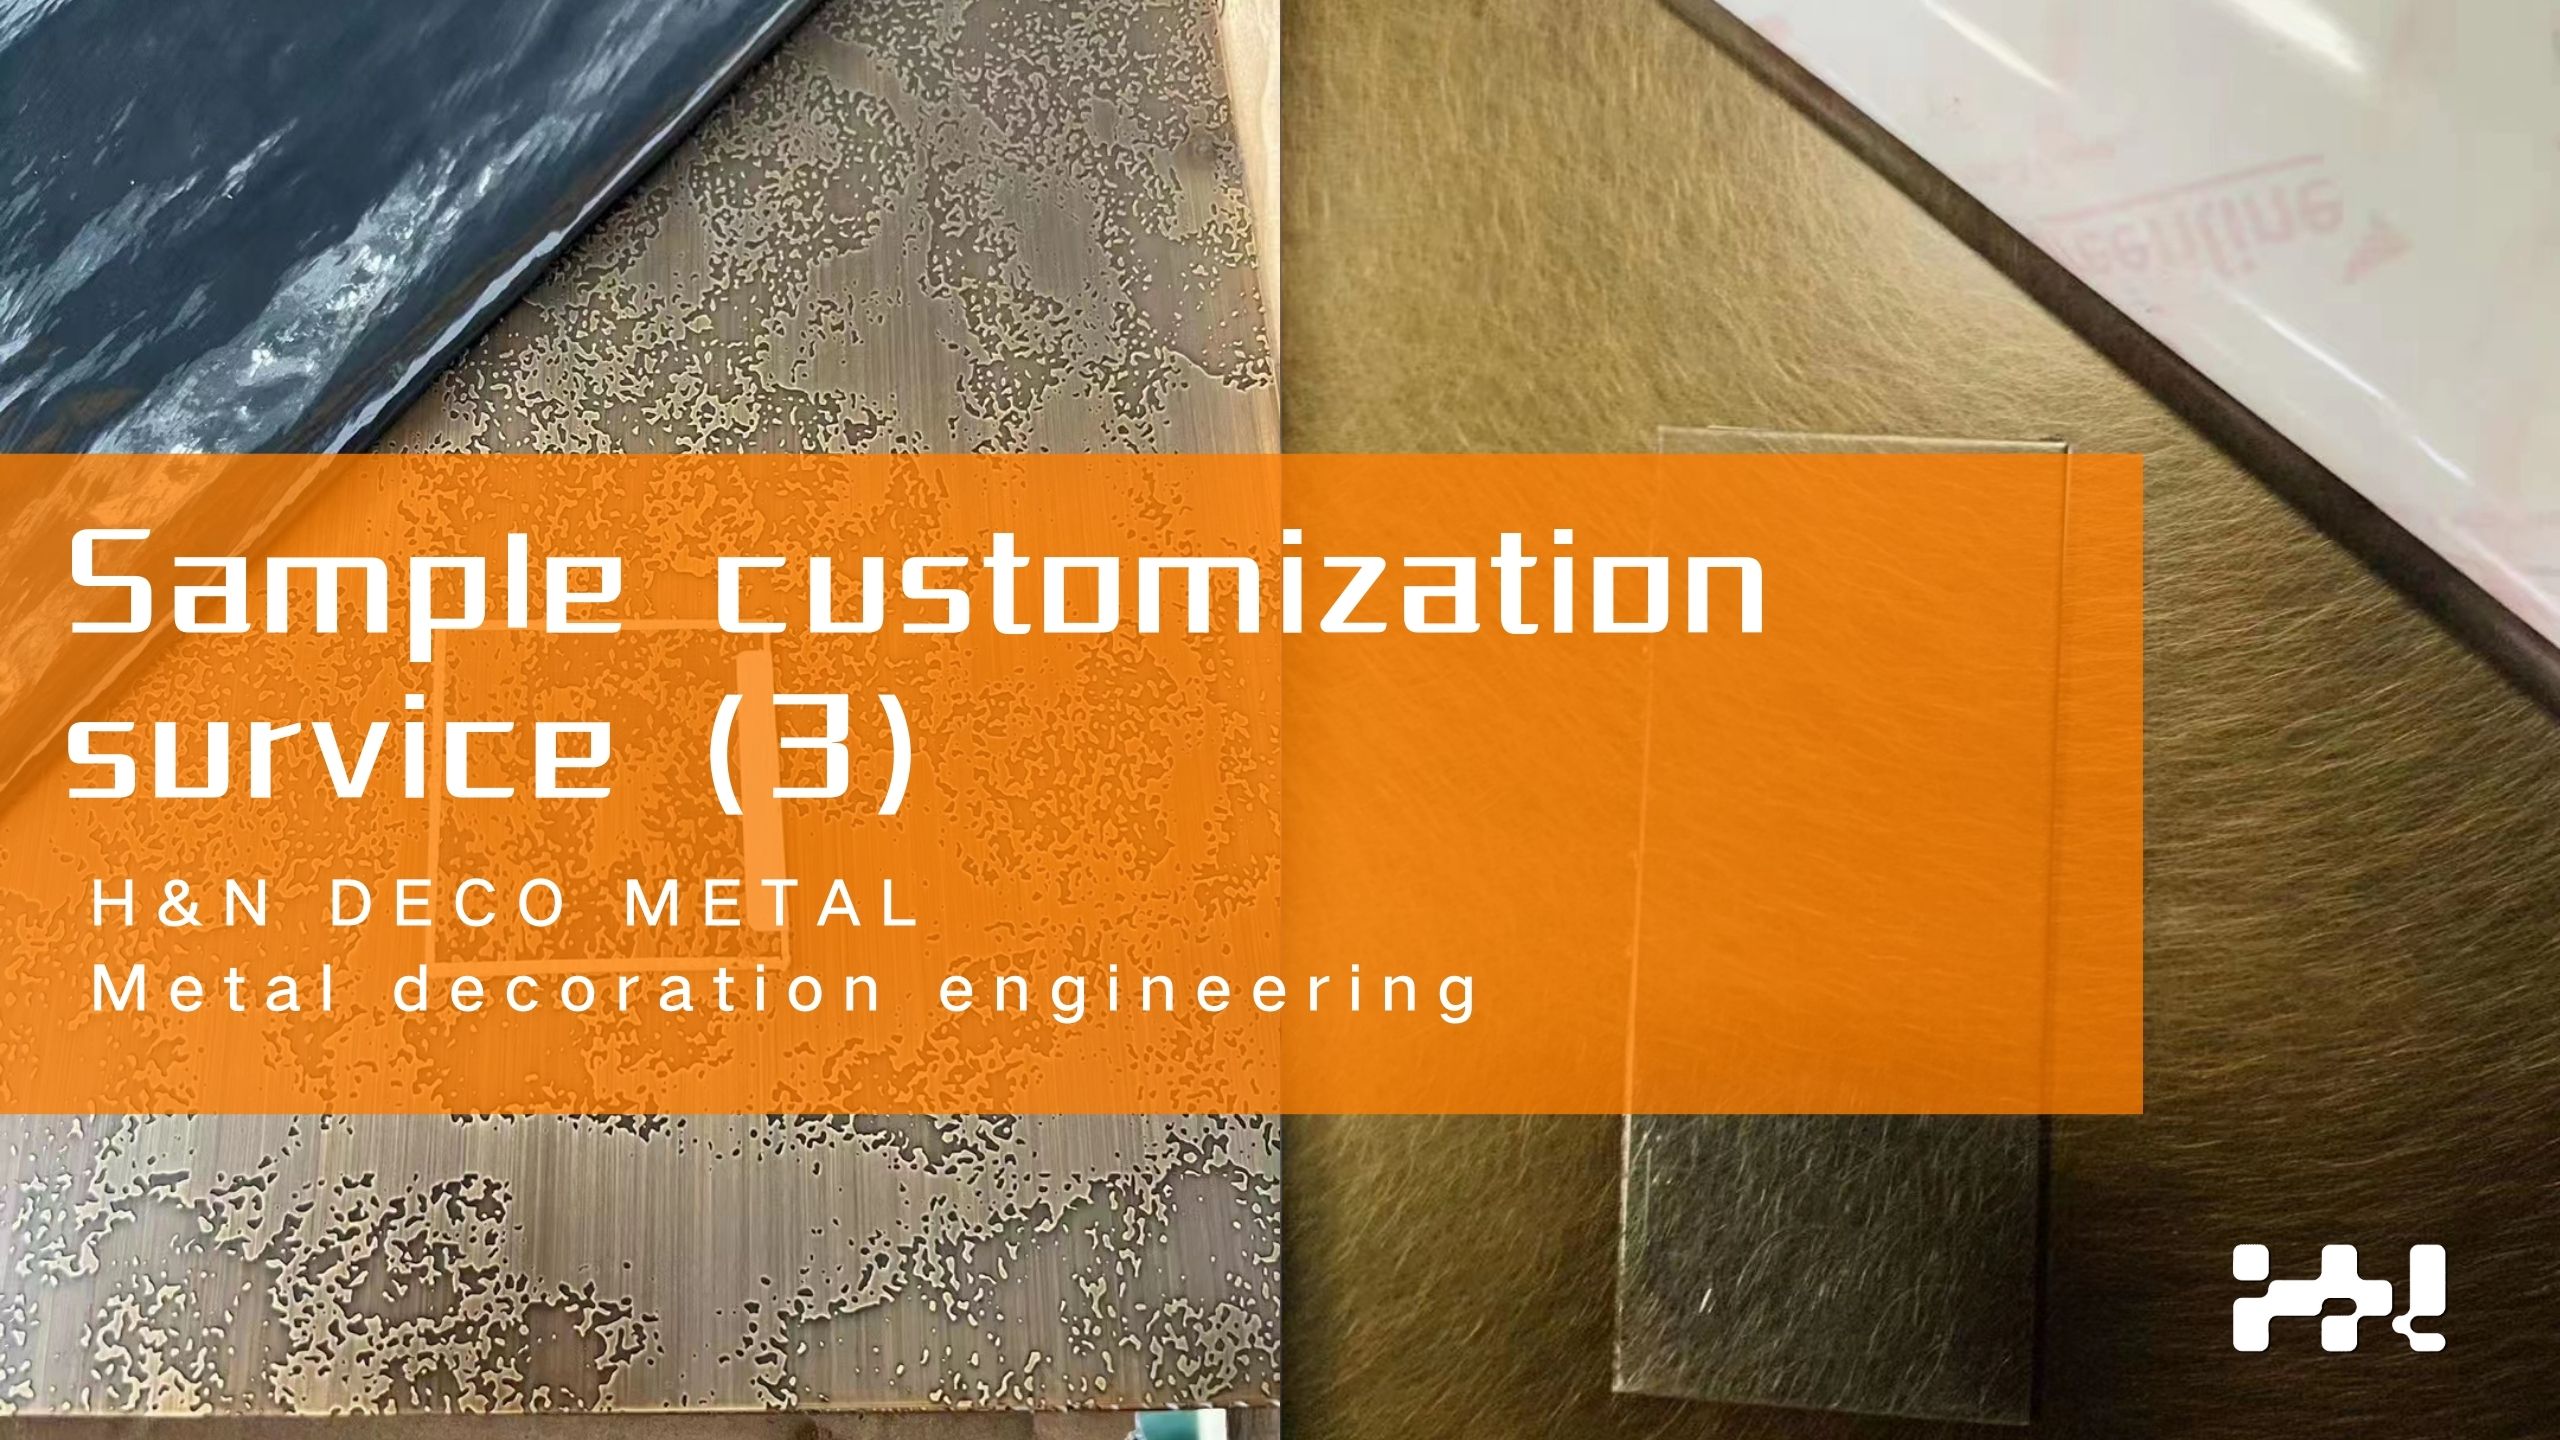 Stainless steel sample Customization Service (3)